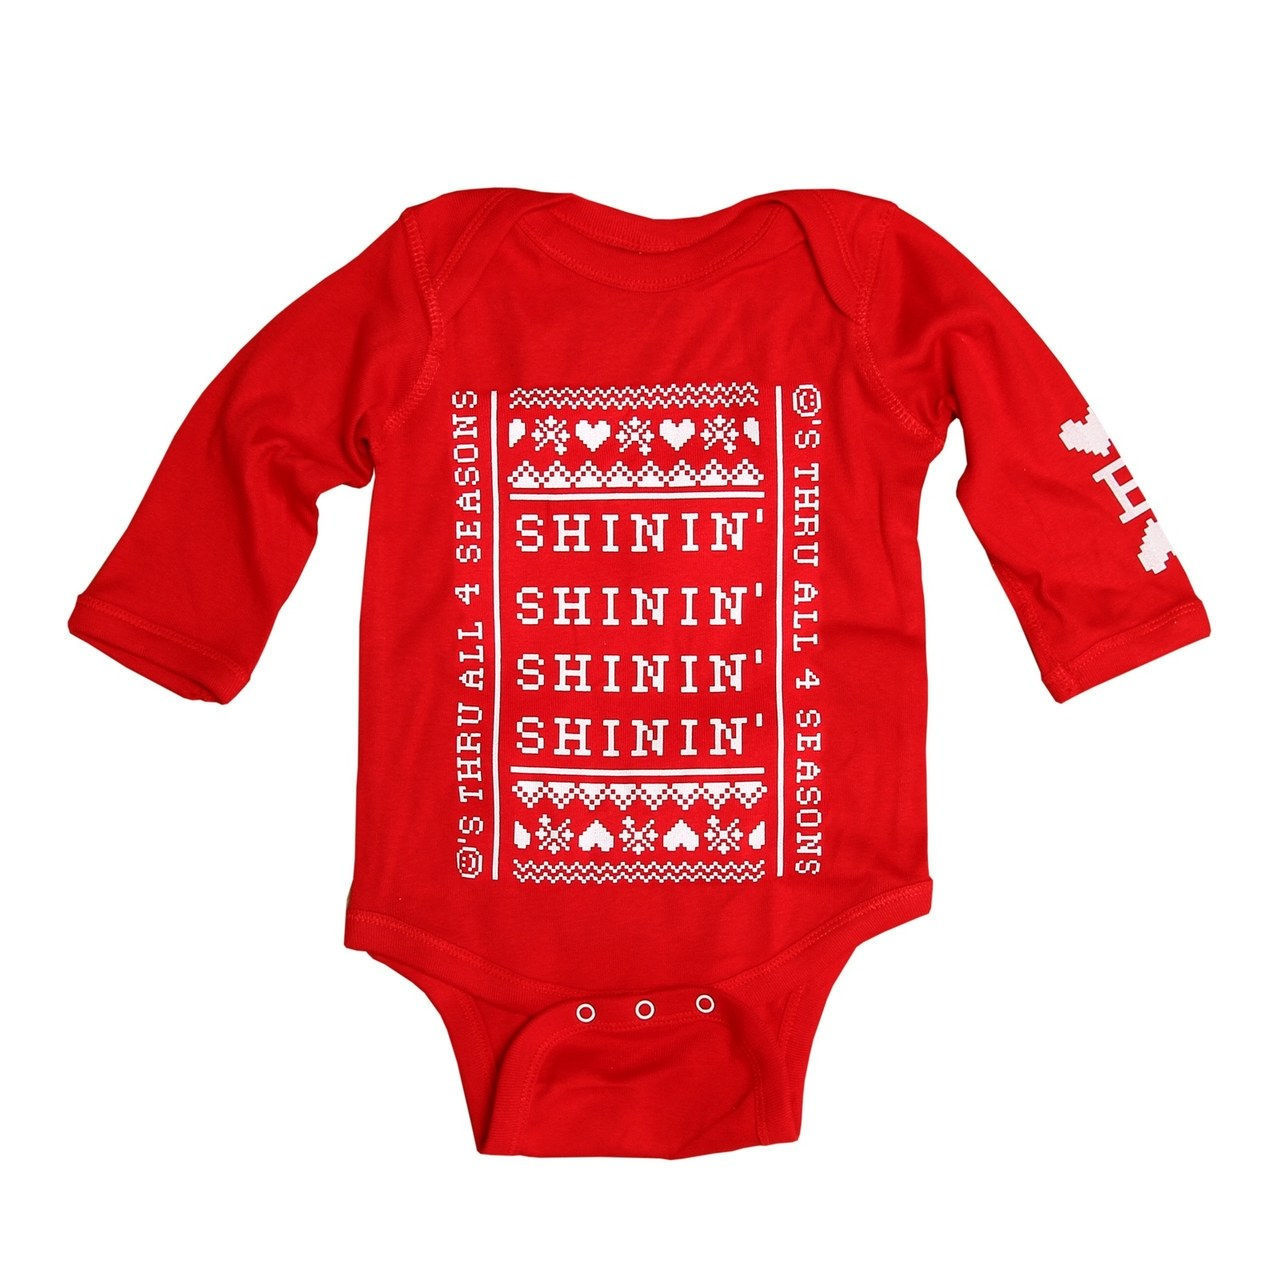 Shinin' Ugly Sweater Infant Onesie, $30, [Beyonce.com](https://shop.beyonce.com/products/62193-shinin-ugly-sweater-infant-onesie) 